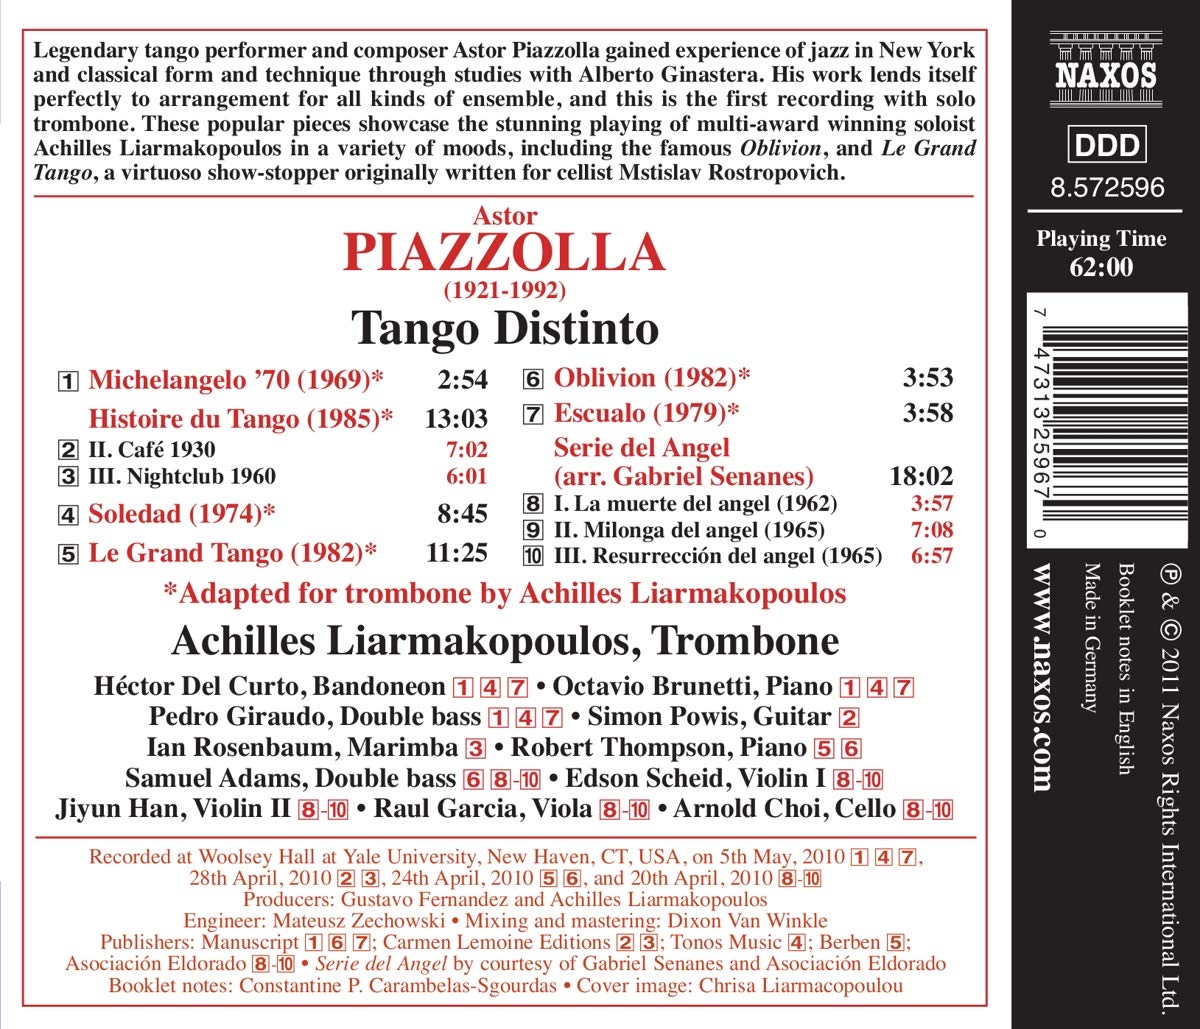 Achilles Liarmakopoulos 피아졸라: 솔로 트럼본과 앙상블을 위한 편곡들 (Piazzolla: Tango Distinto - Music for Solo Trombone and Instrumental Ensemble) 